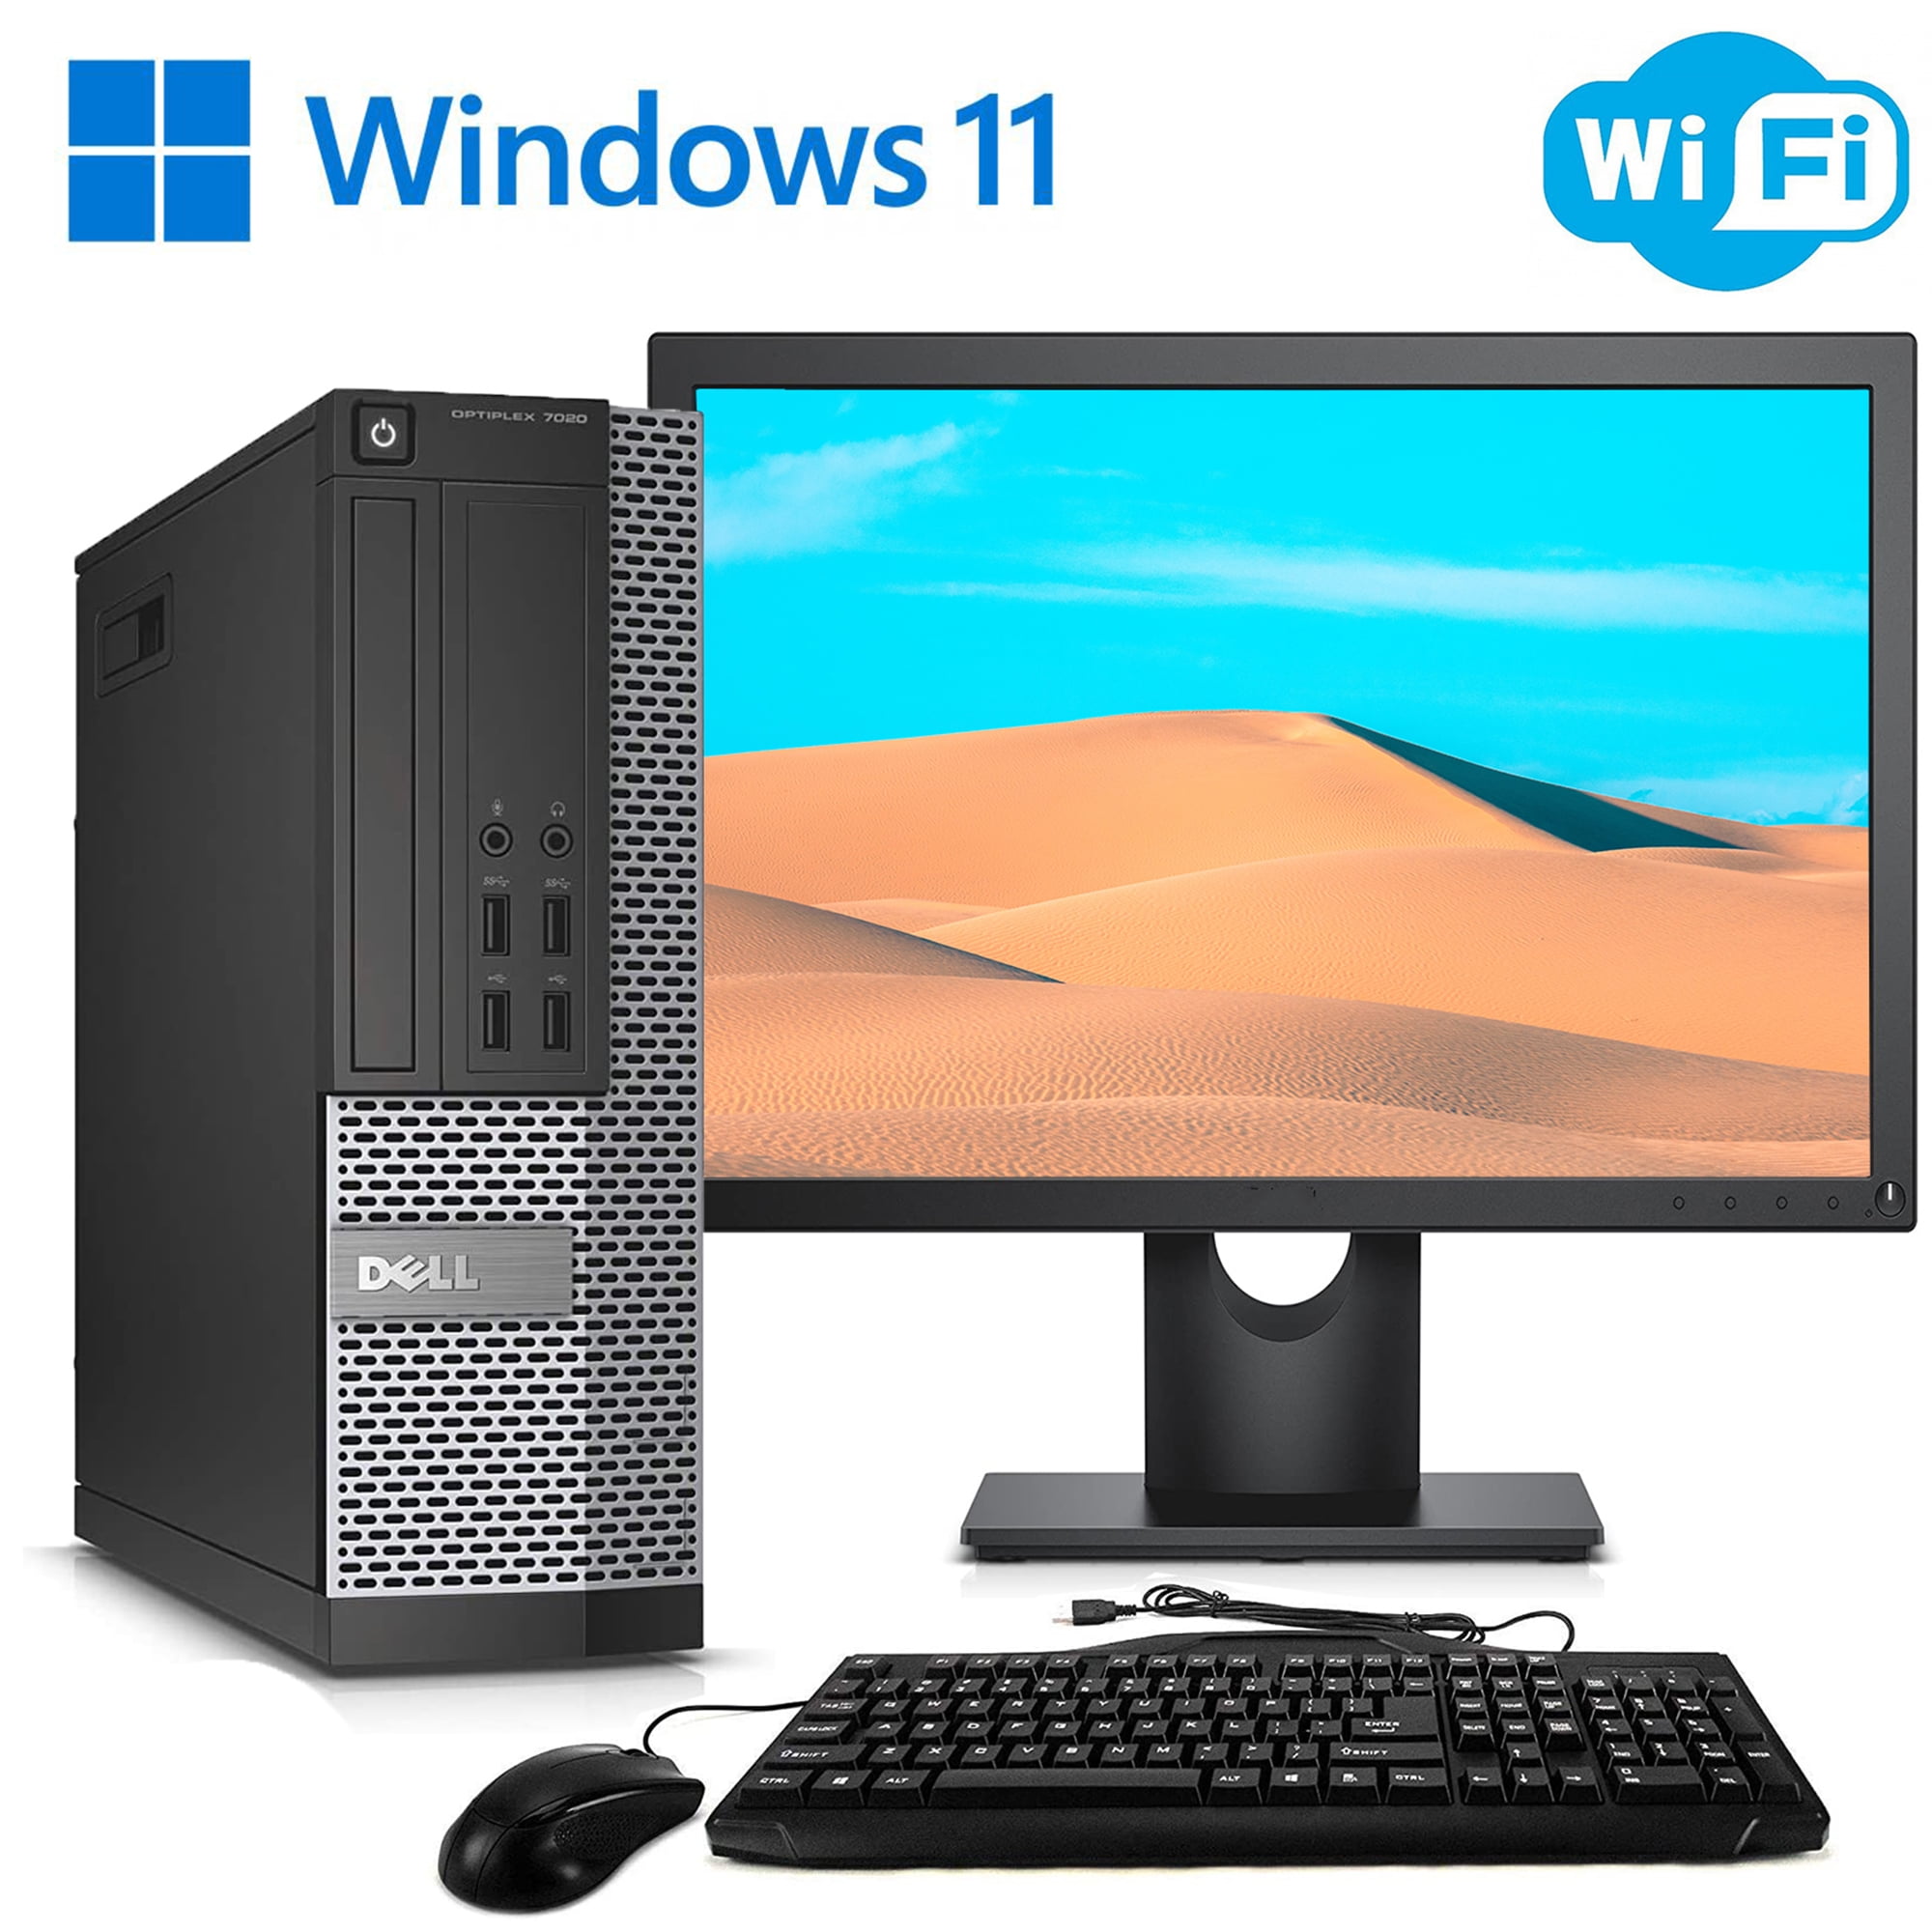 Dell i5 Desktop Computer 3.20GHz 8GB RAM 500GB HD 19 LCD Windows